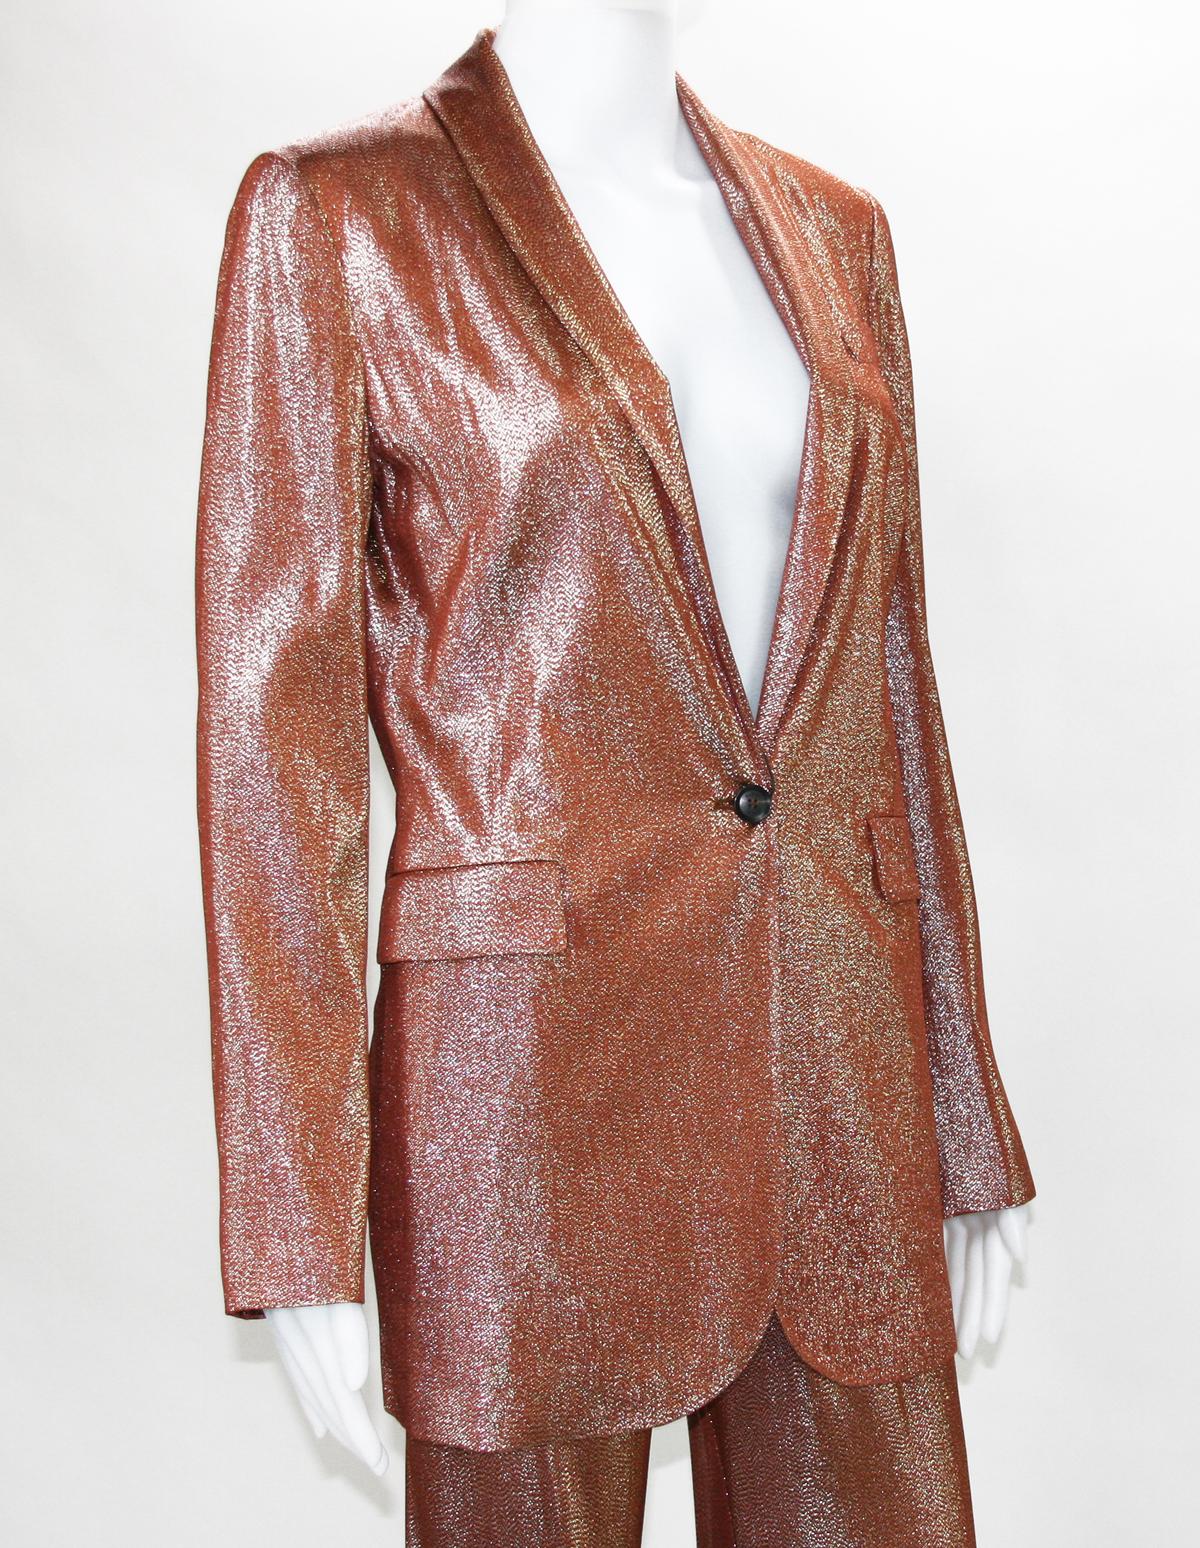 Women's New $3950 Runway GUCCI Suit Iridescent Rust Liquid Lame Jacket & Pants size 38